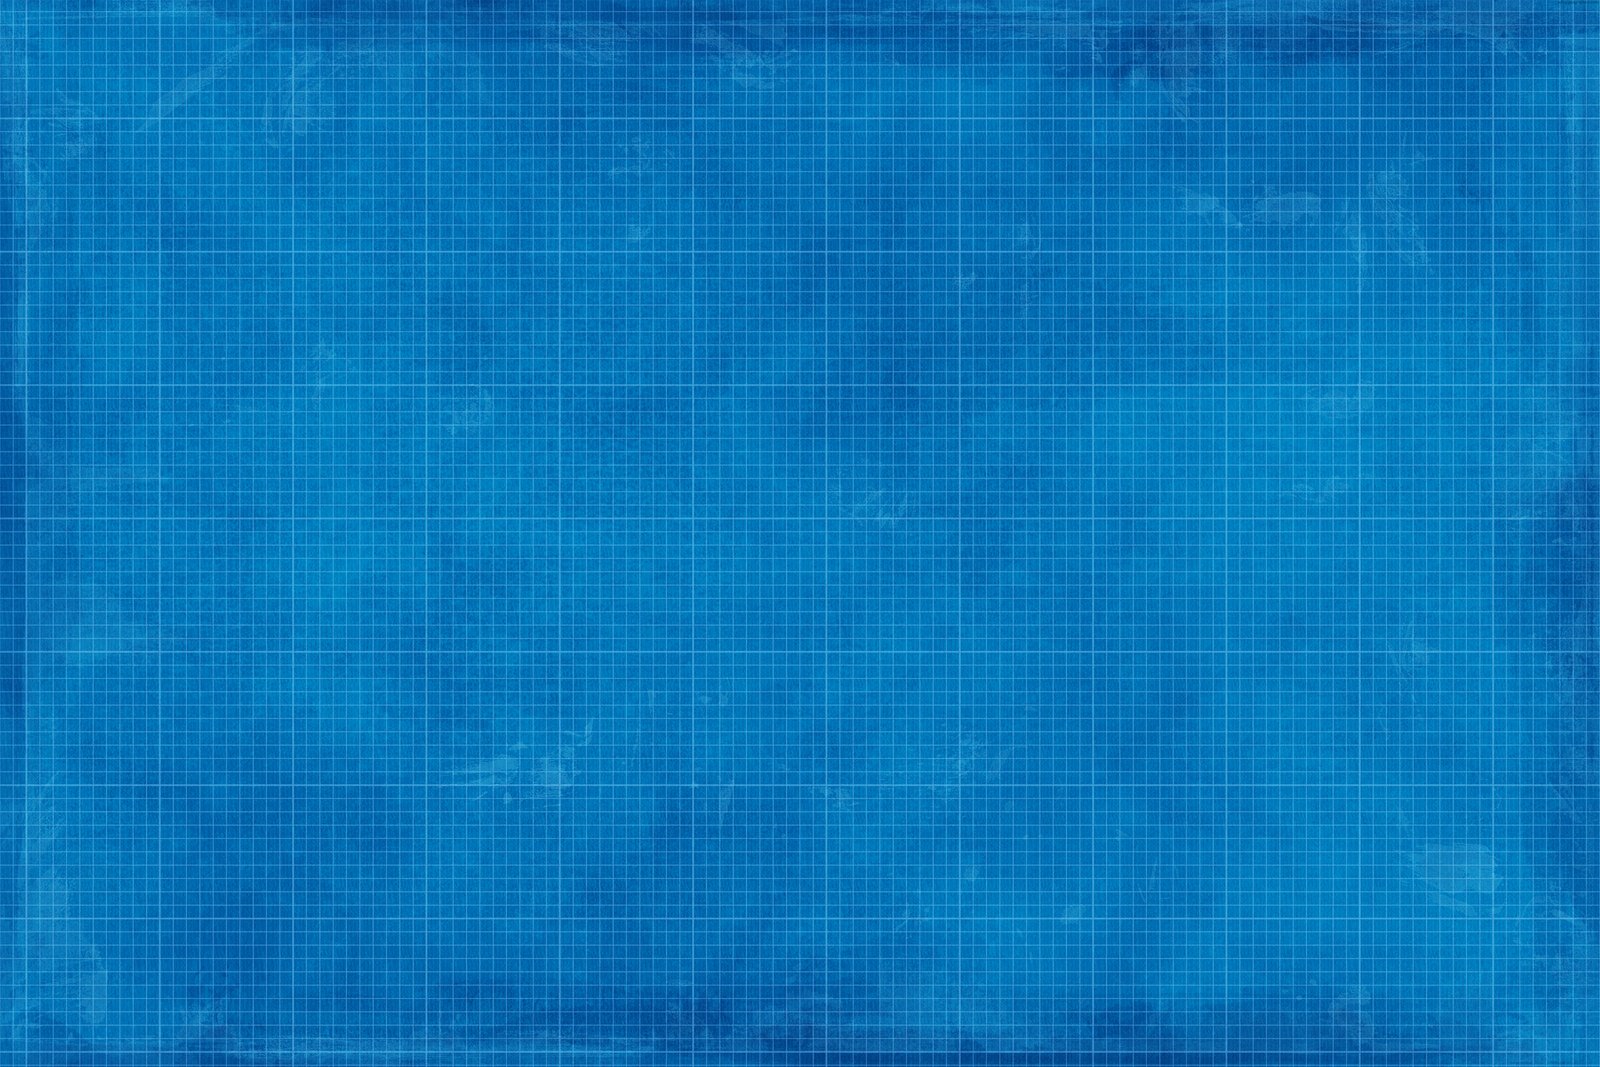 Blueprint grid paper | PSDGraphics